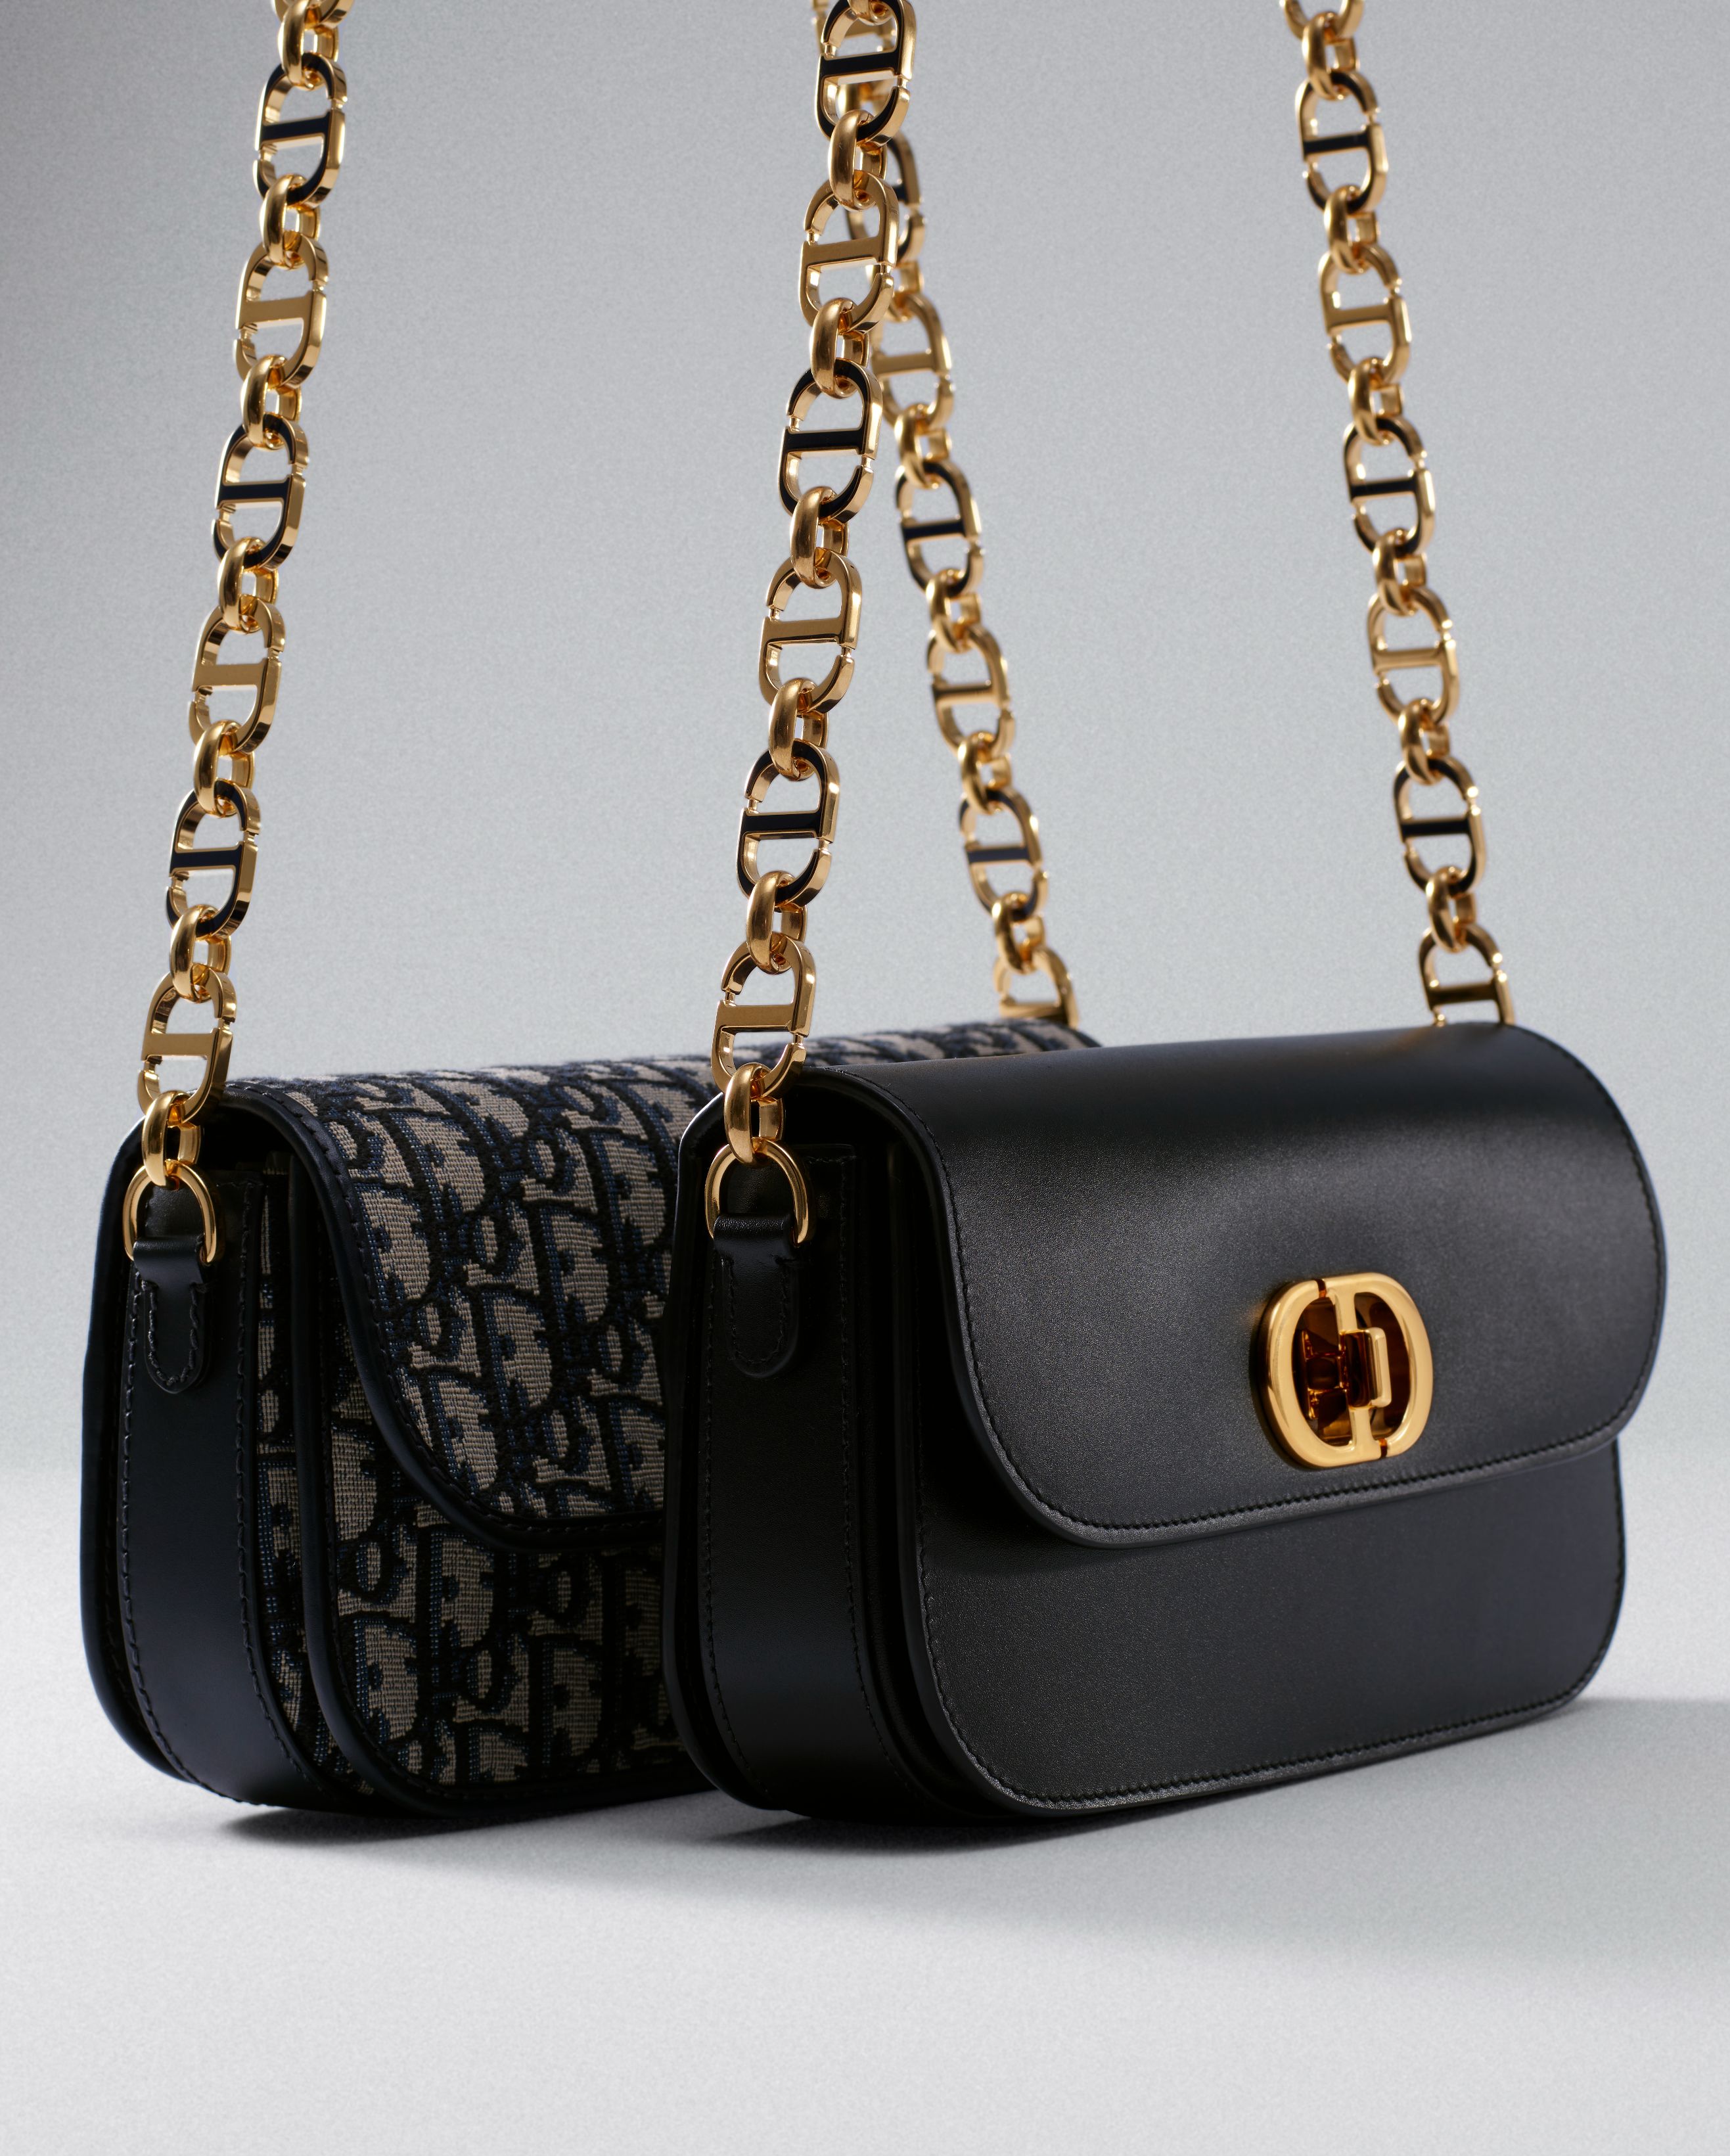 First Look At Dior's New 30 Montaigne Avenue Bag - A&E Magazine